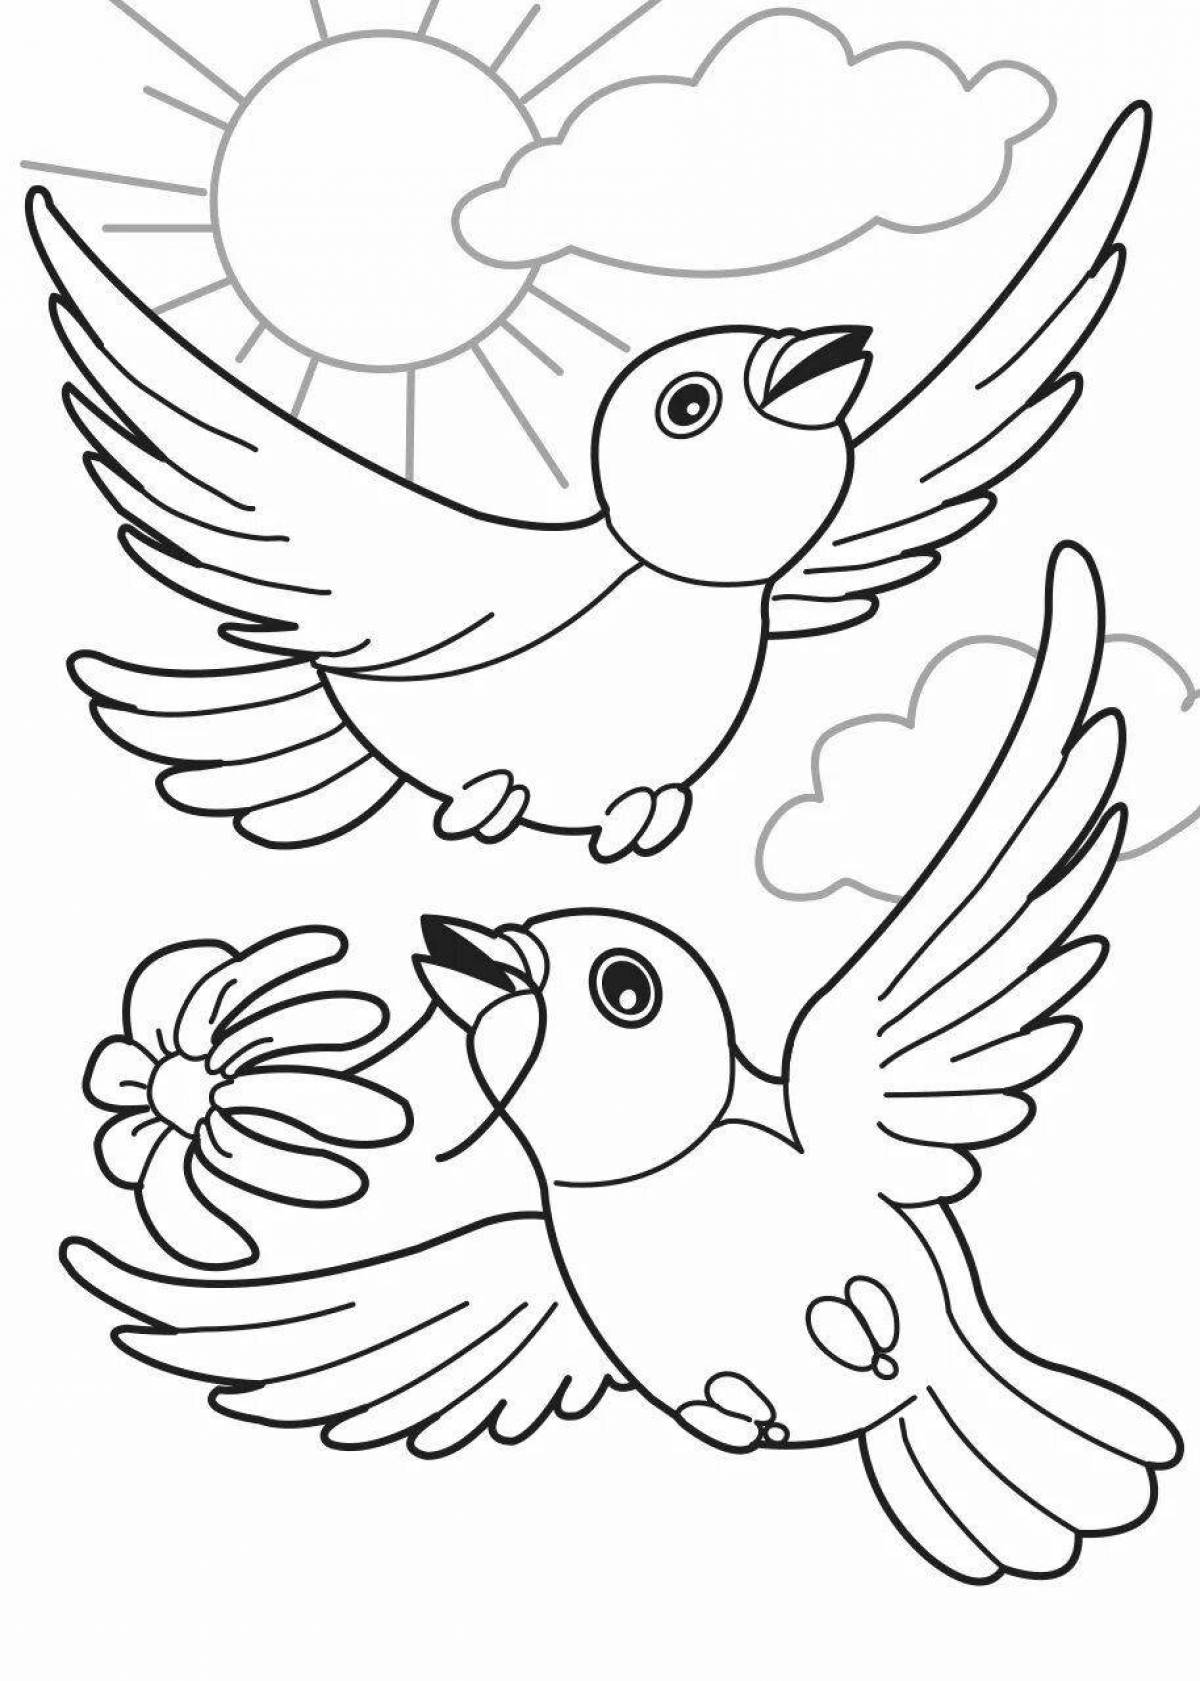 Pretty bird coloring page для детей 4-5 лет